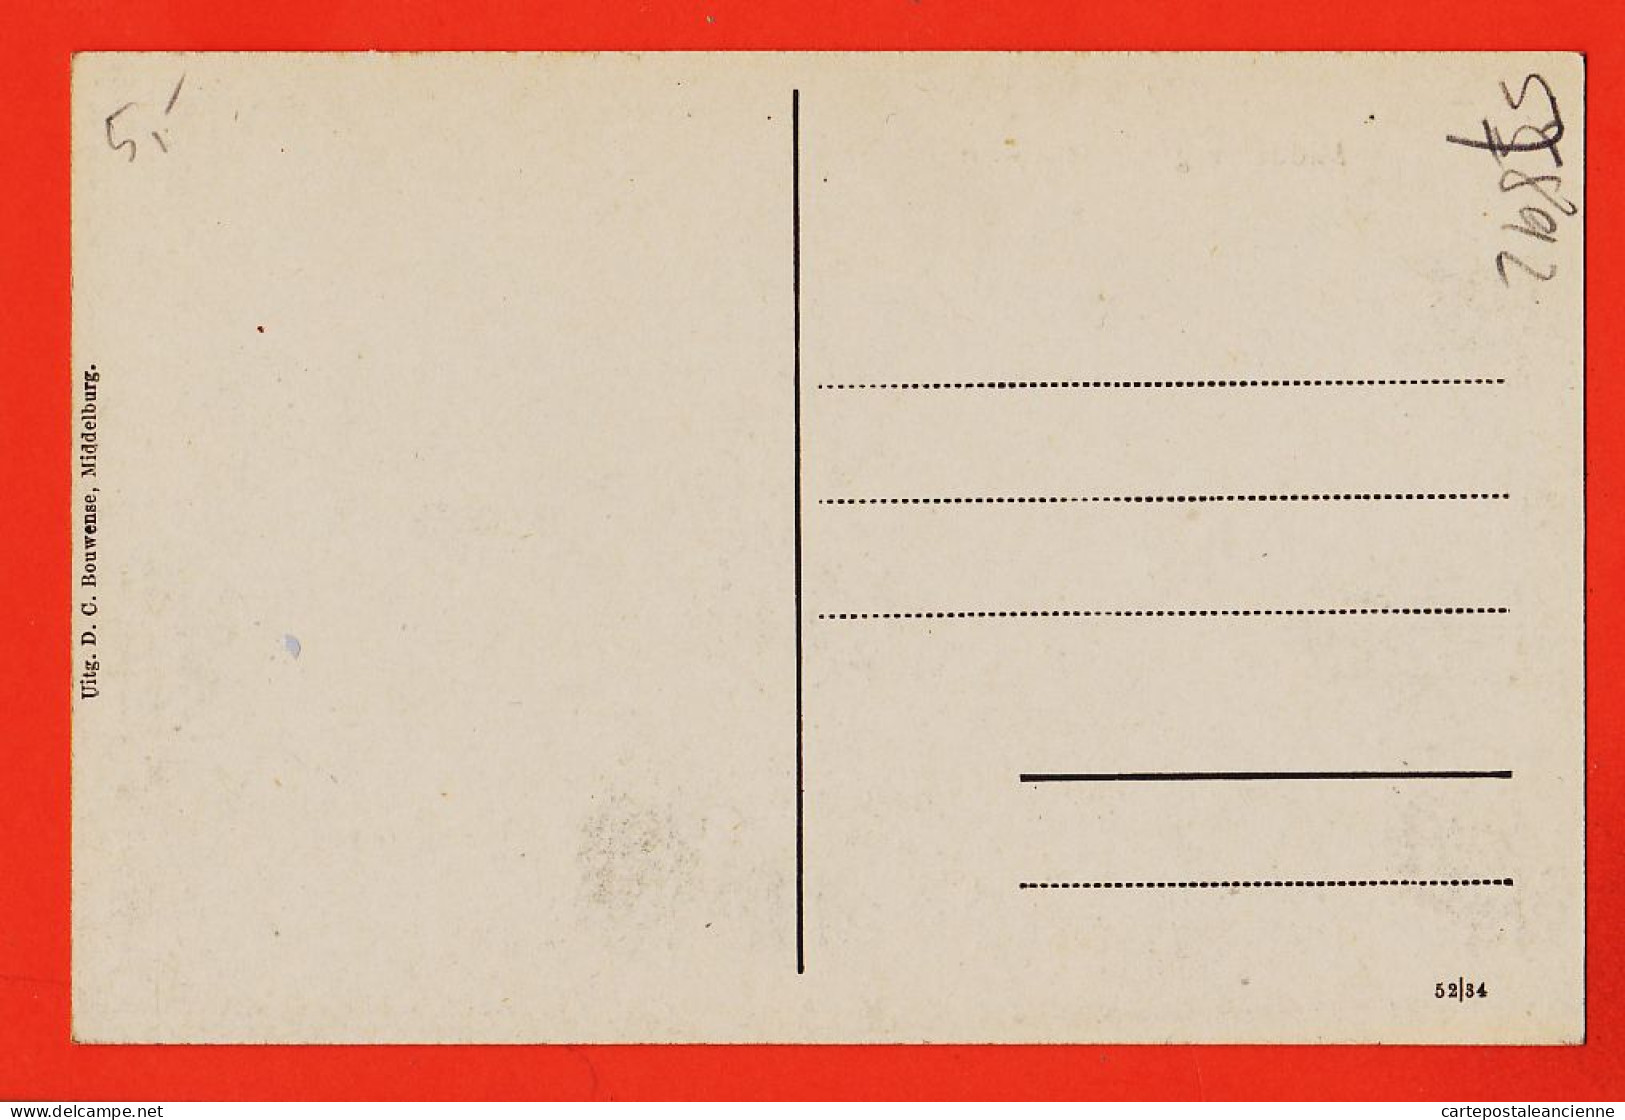 08995 / ⭐ ( In Perfecte Staat ) MIDDELBURG Zeeland Koepoort 1910s Uitg D.C BOUWENSE Nederland Pays-Bas - Middelburg